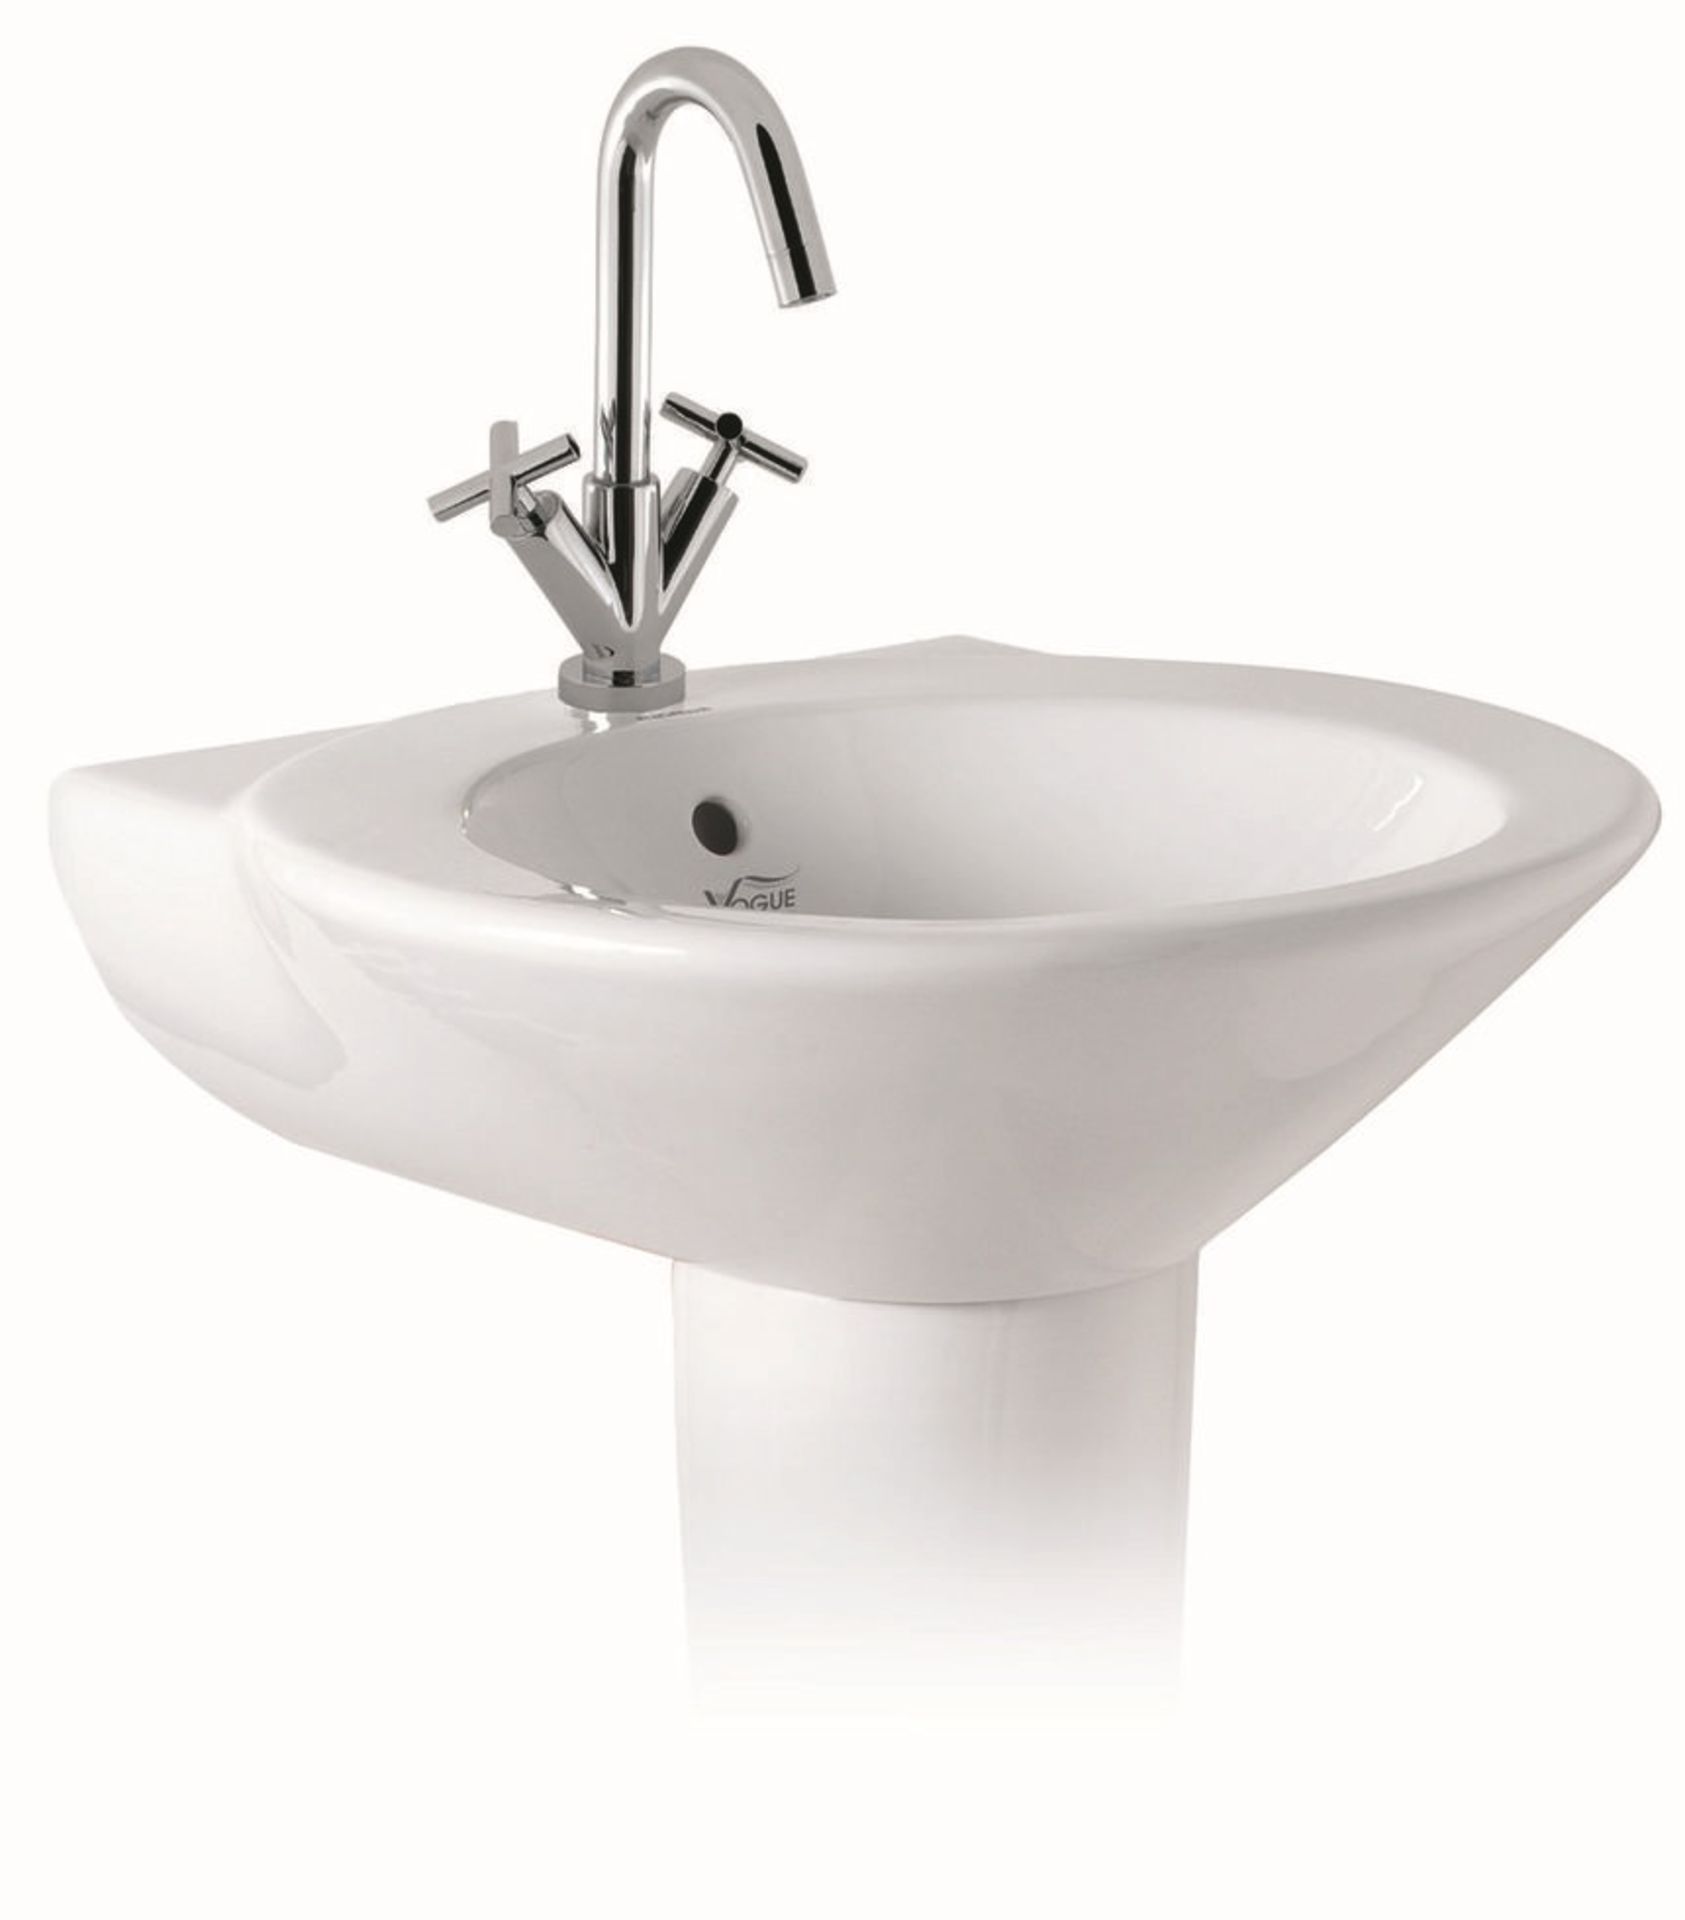 4 x Vogue Tefeli 1th 550mm Bathroom Sink Basin with Pedestal - Brand New and Boxed - Sleek Modern